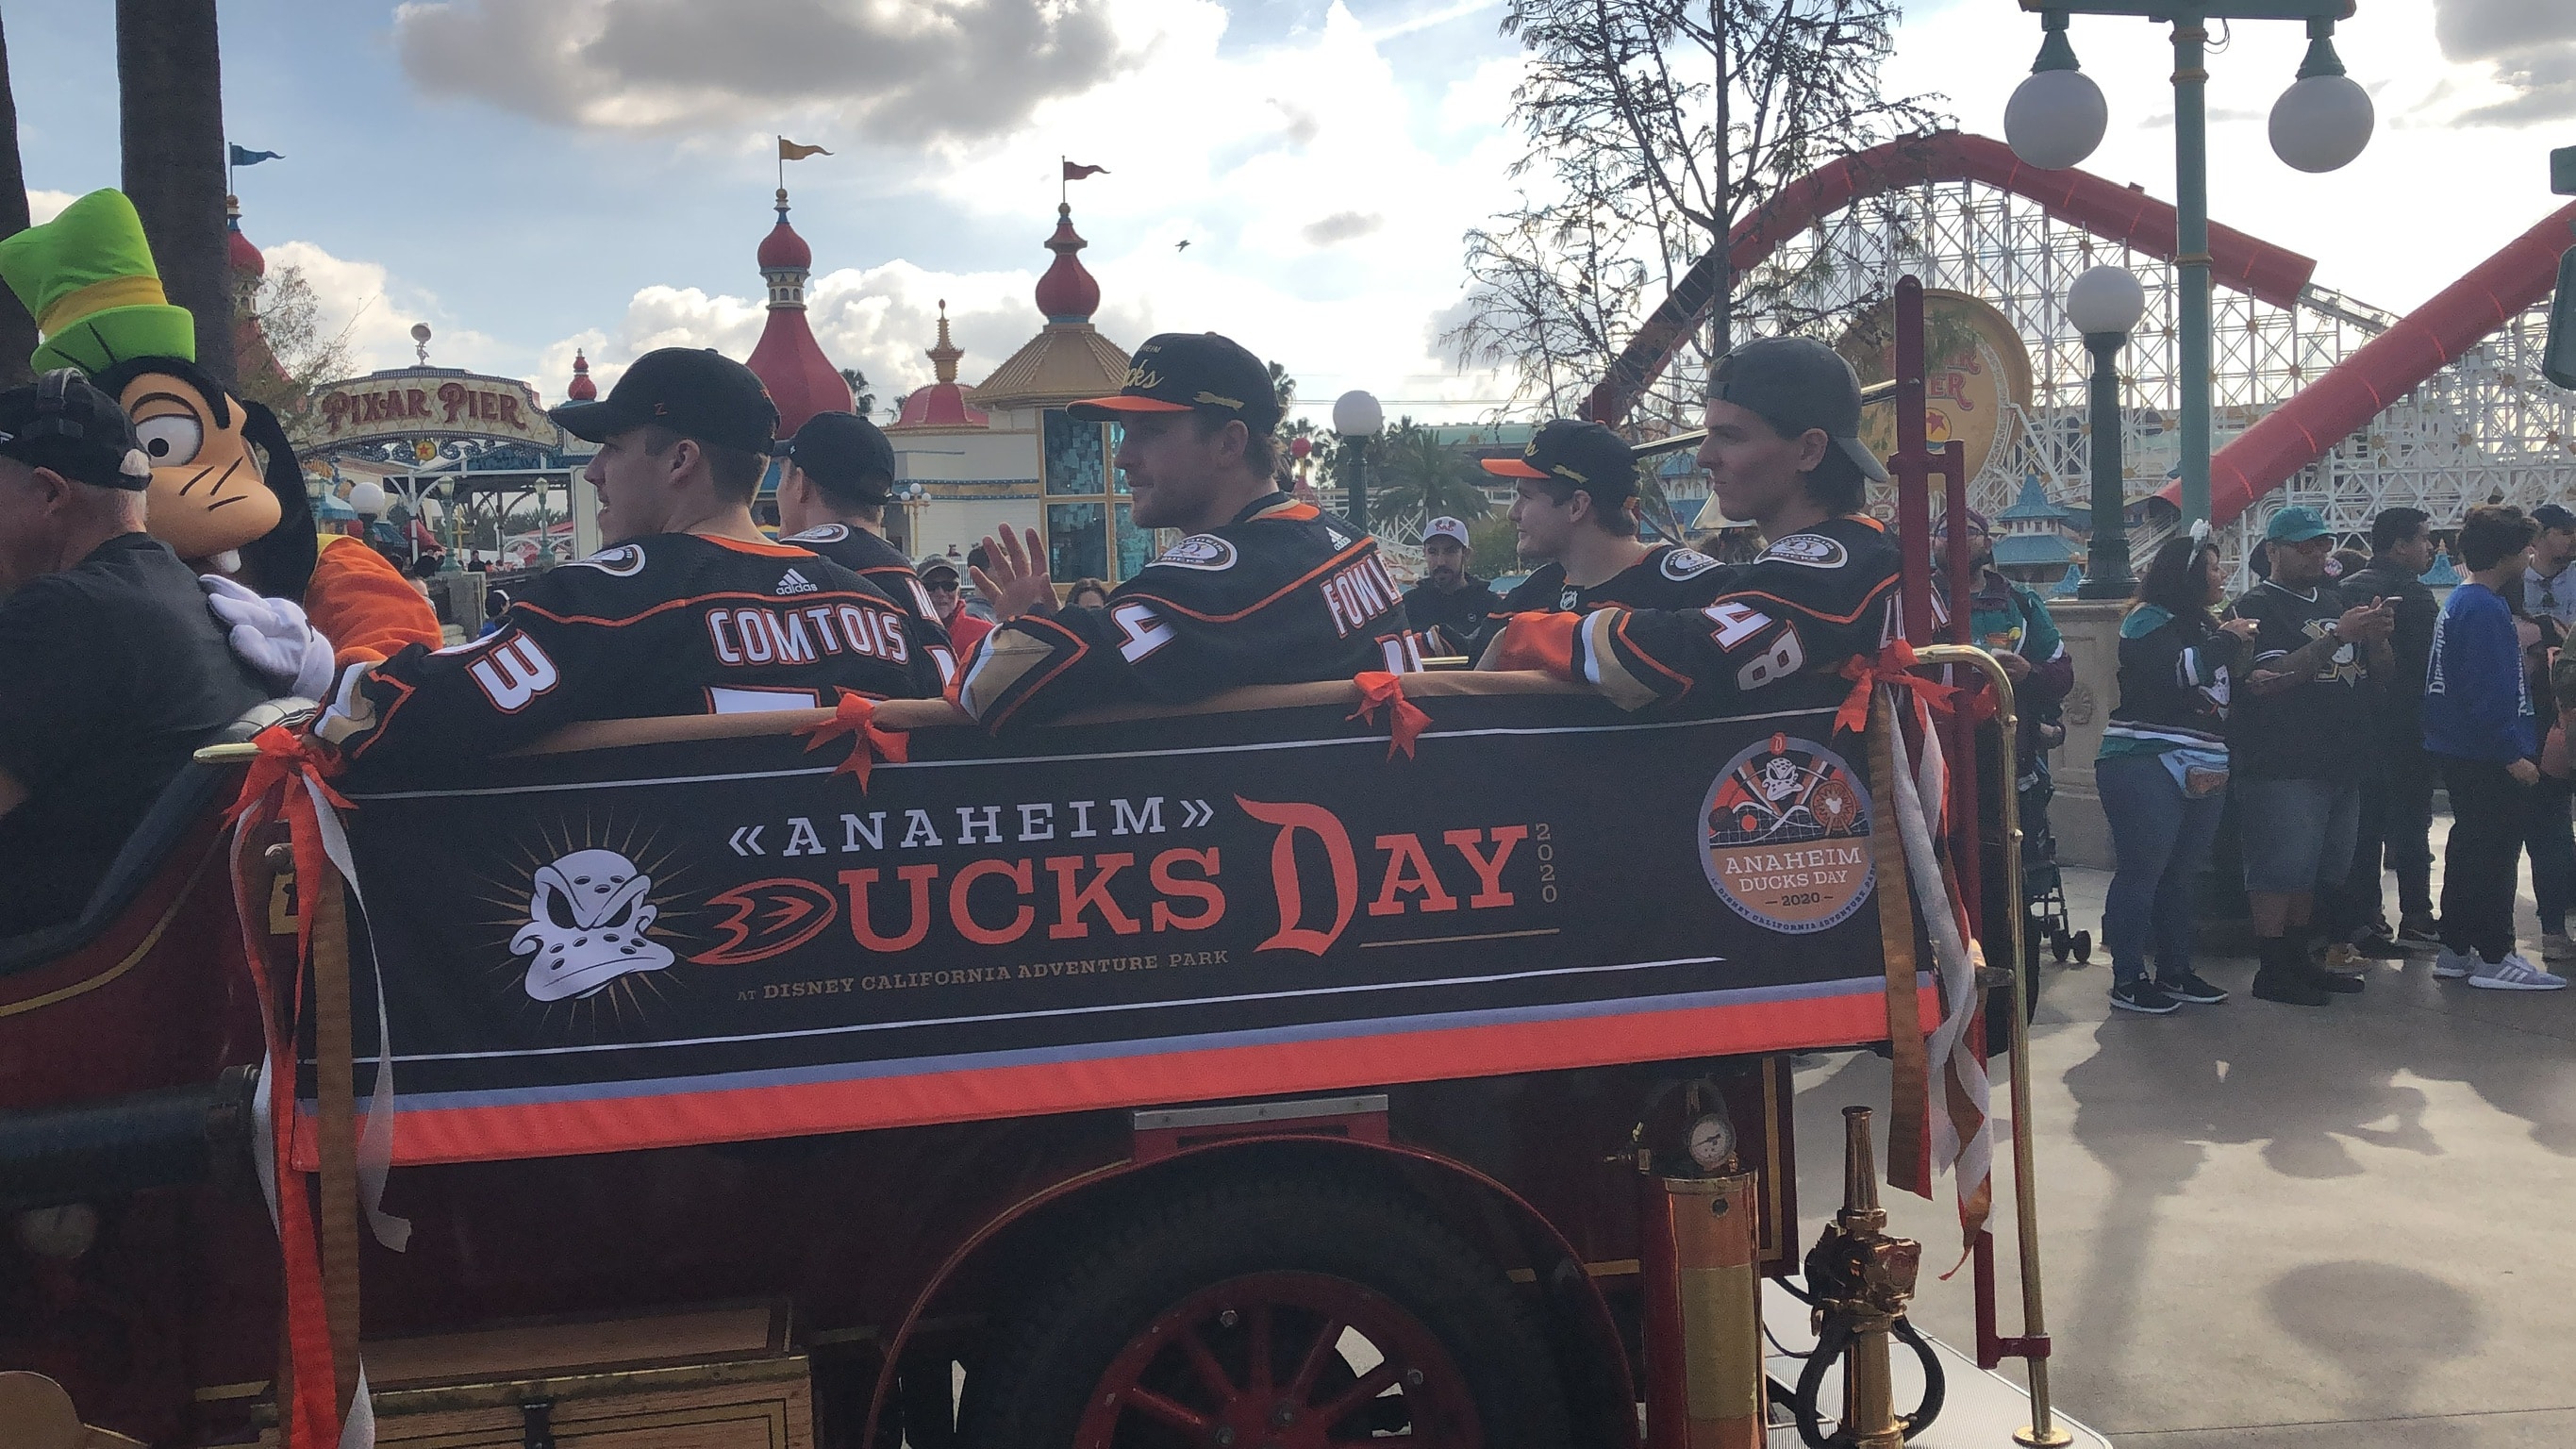 Anaheim Ducks Day Returning to Disney California Adventure in